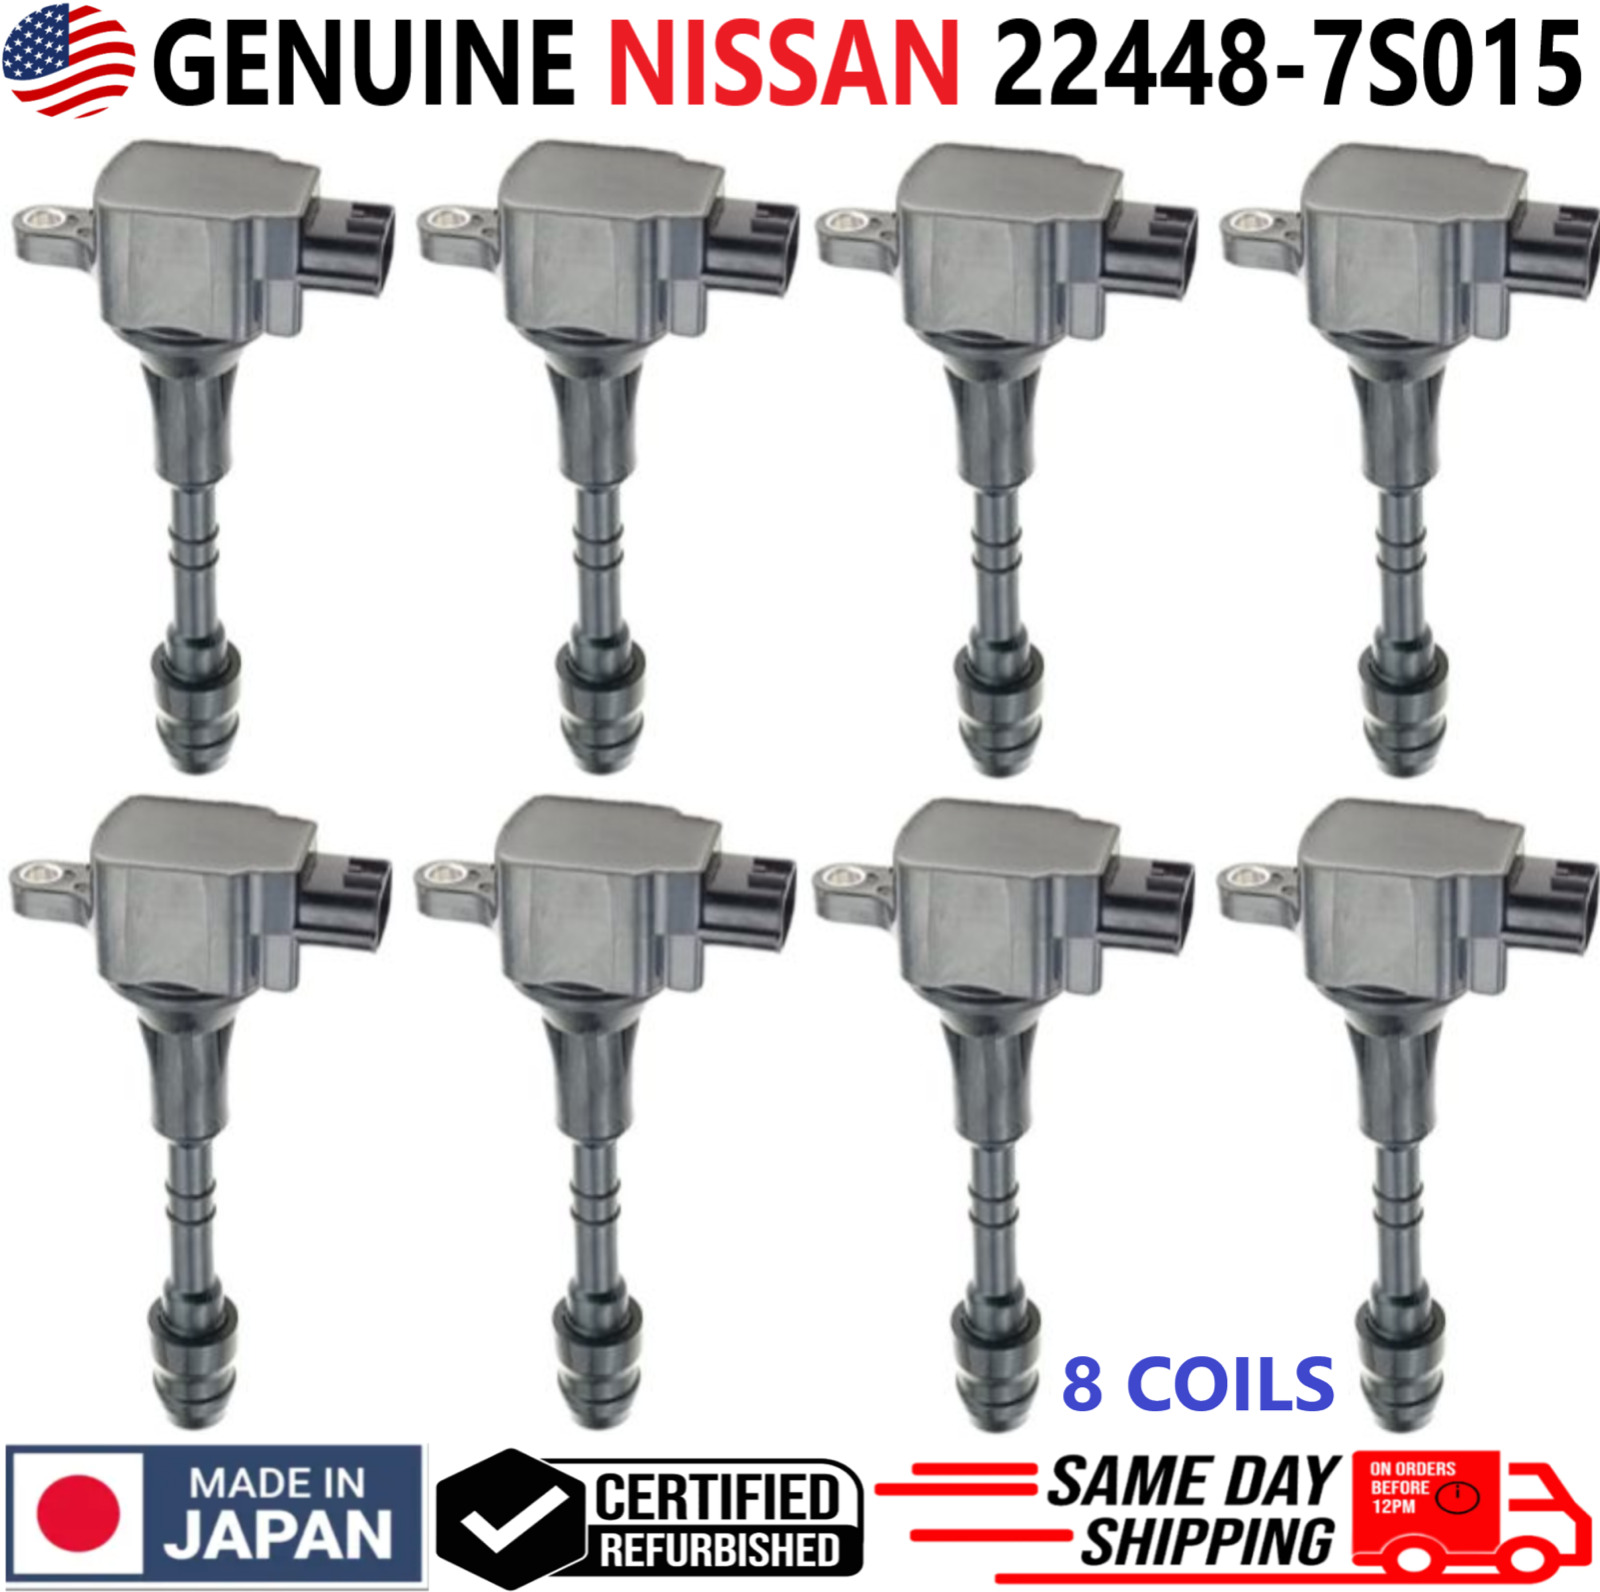 GENUINE x8 Ignition Coils For 2004-2017 Nissan & Infiniti 5.6L V8, 22448-7S015